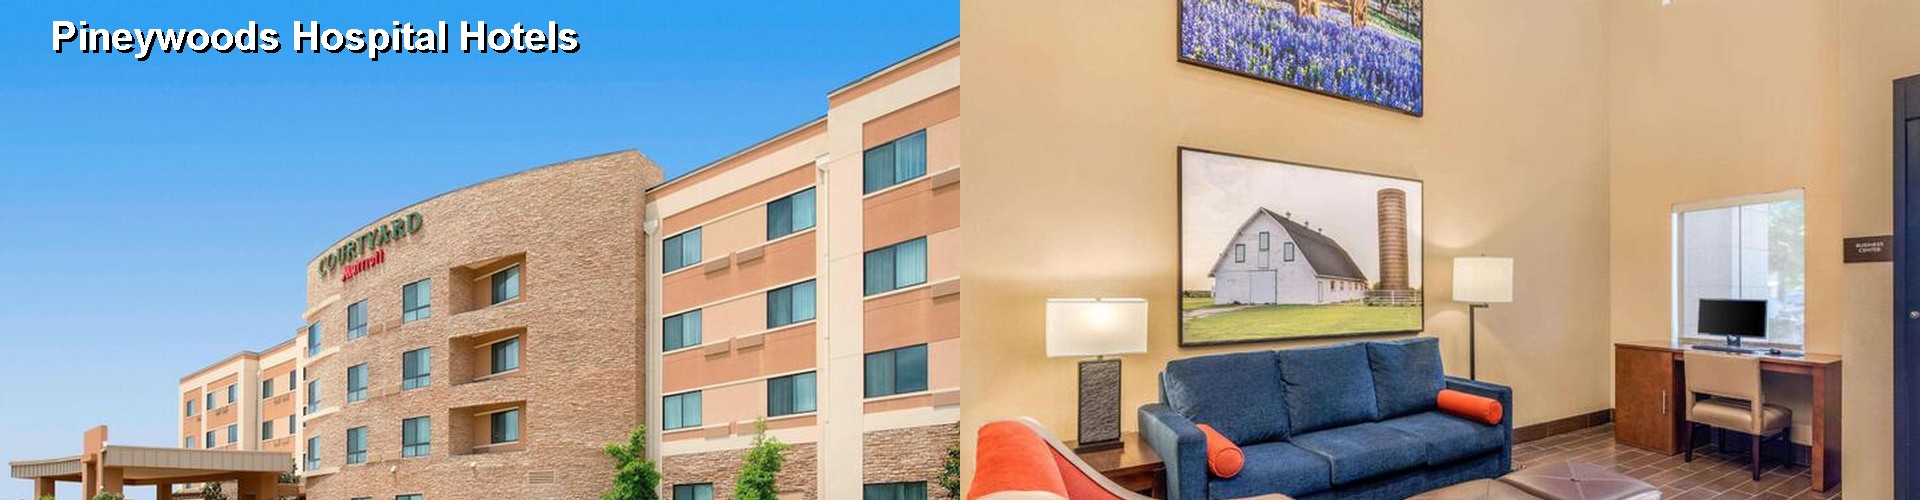 5 Best Hotels near Pineywoods Hospital